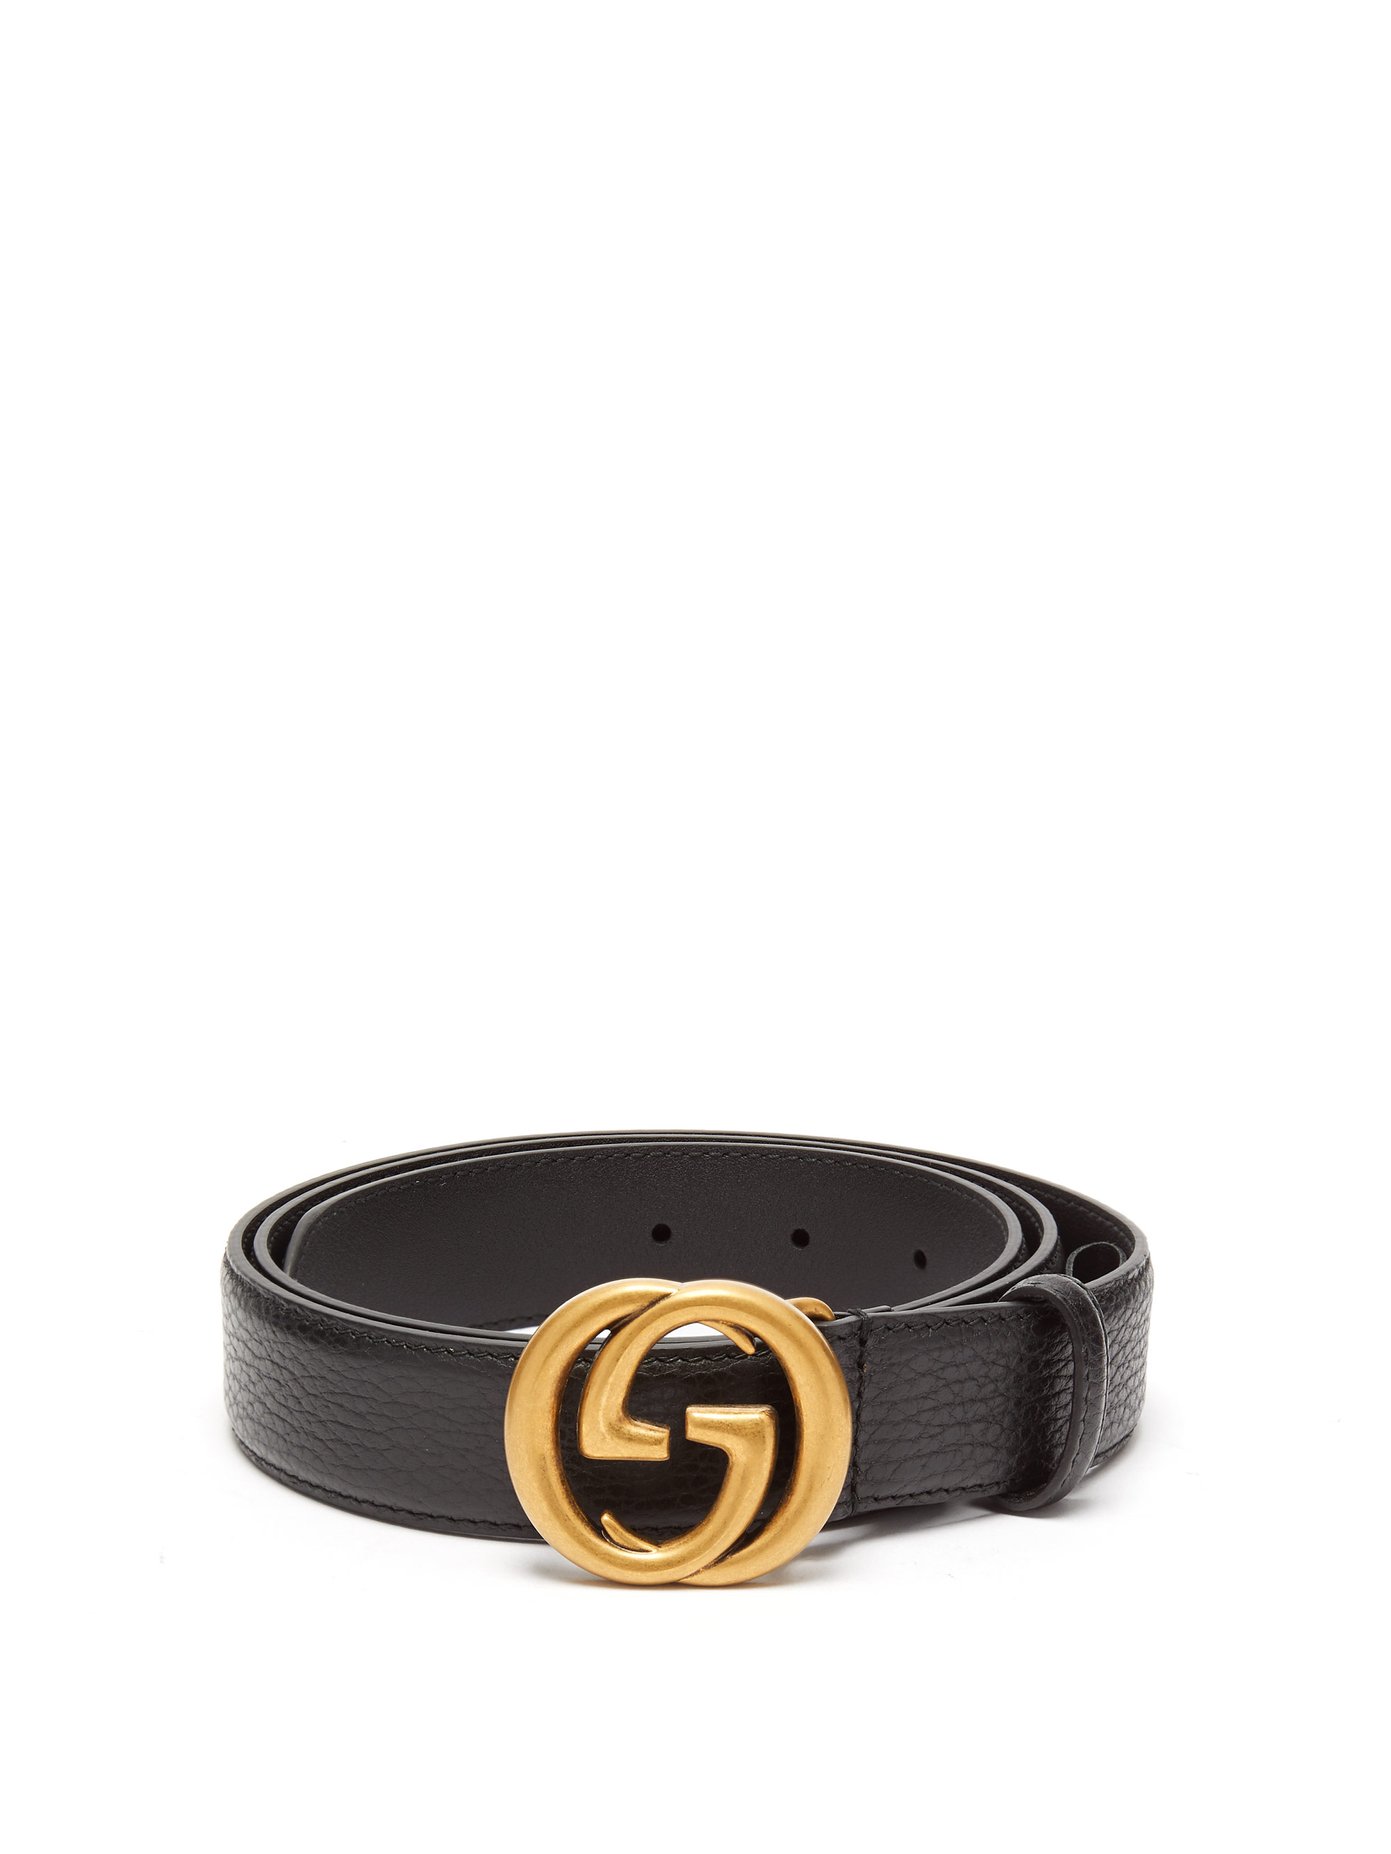 gucci gold and black belt